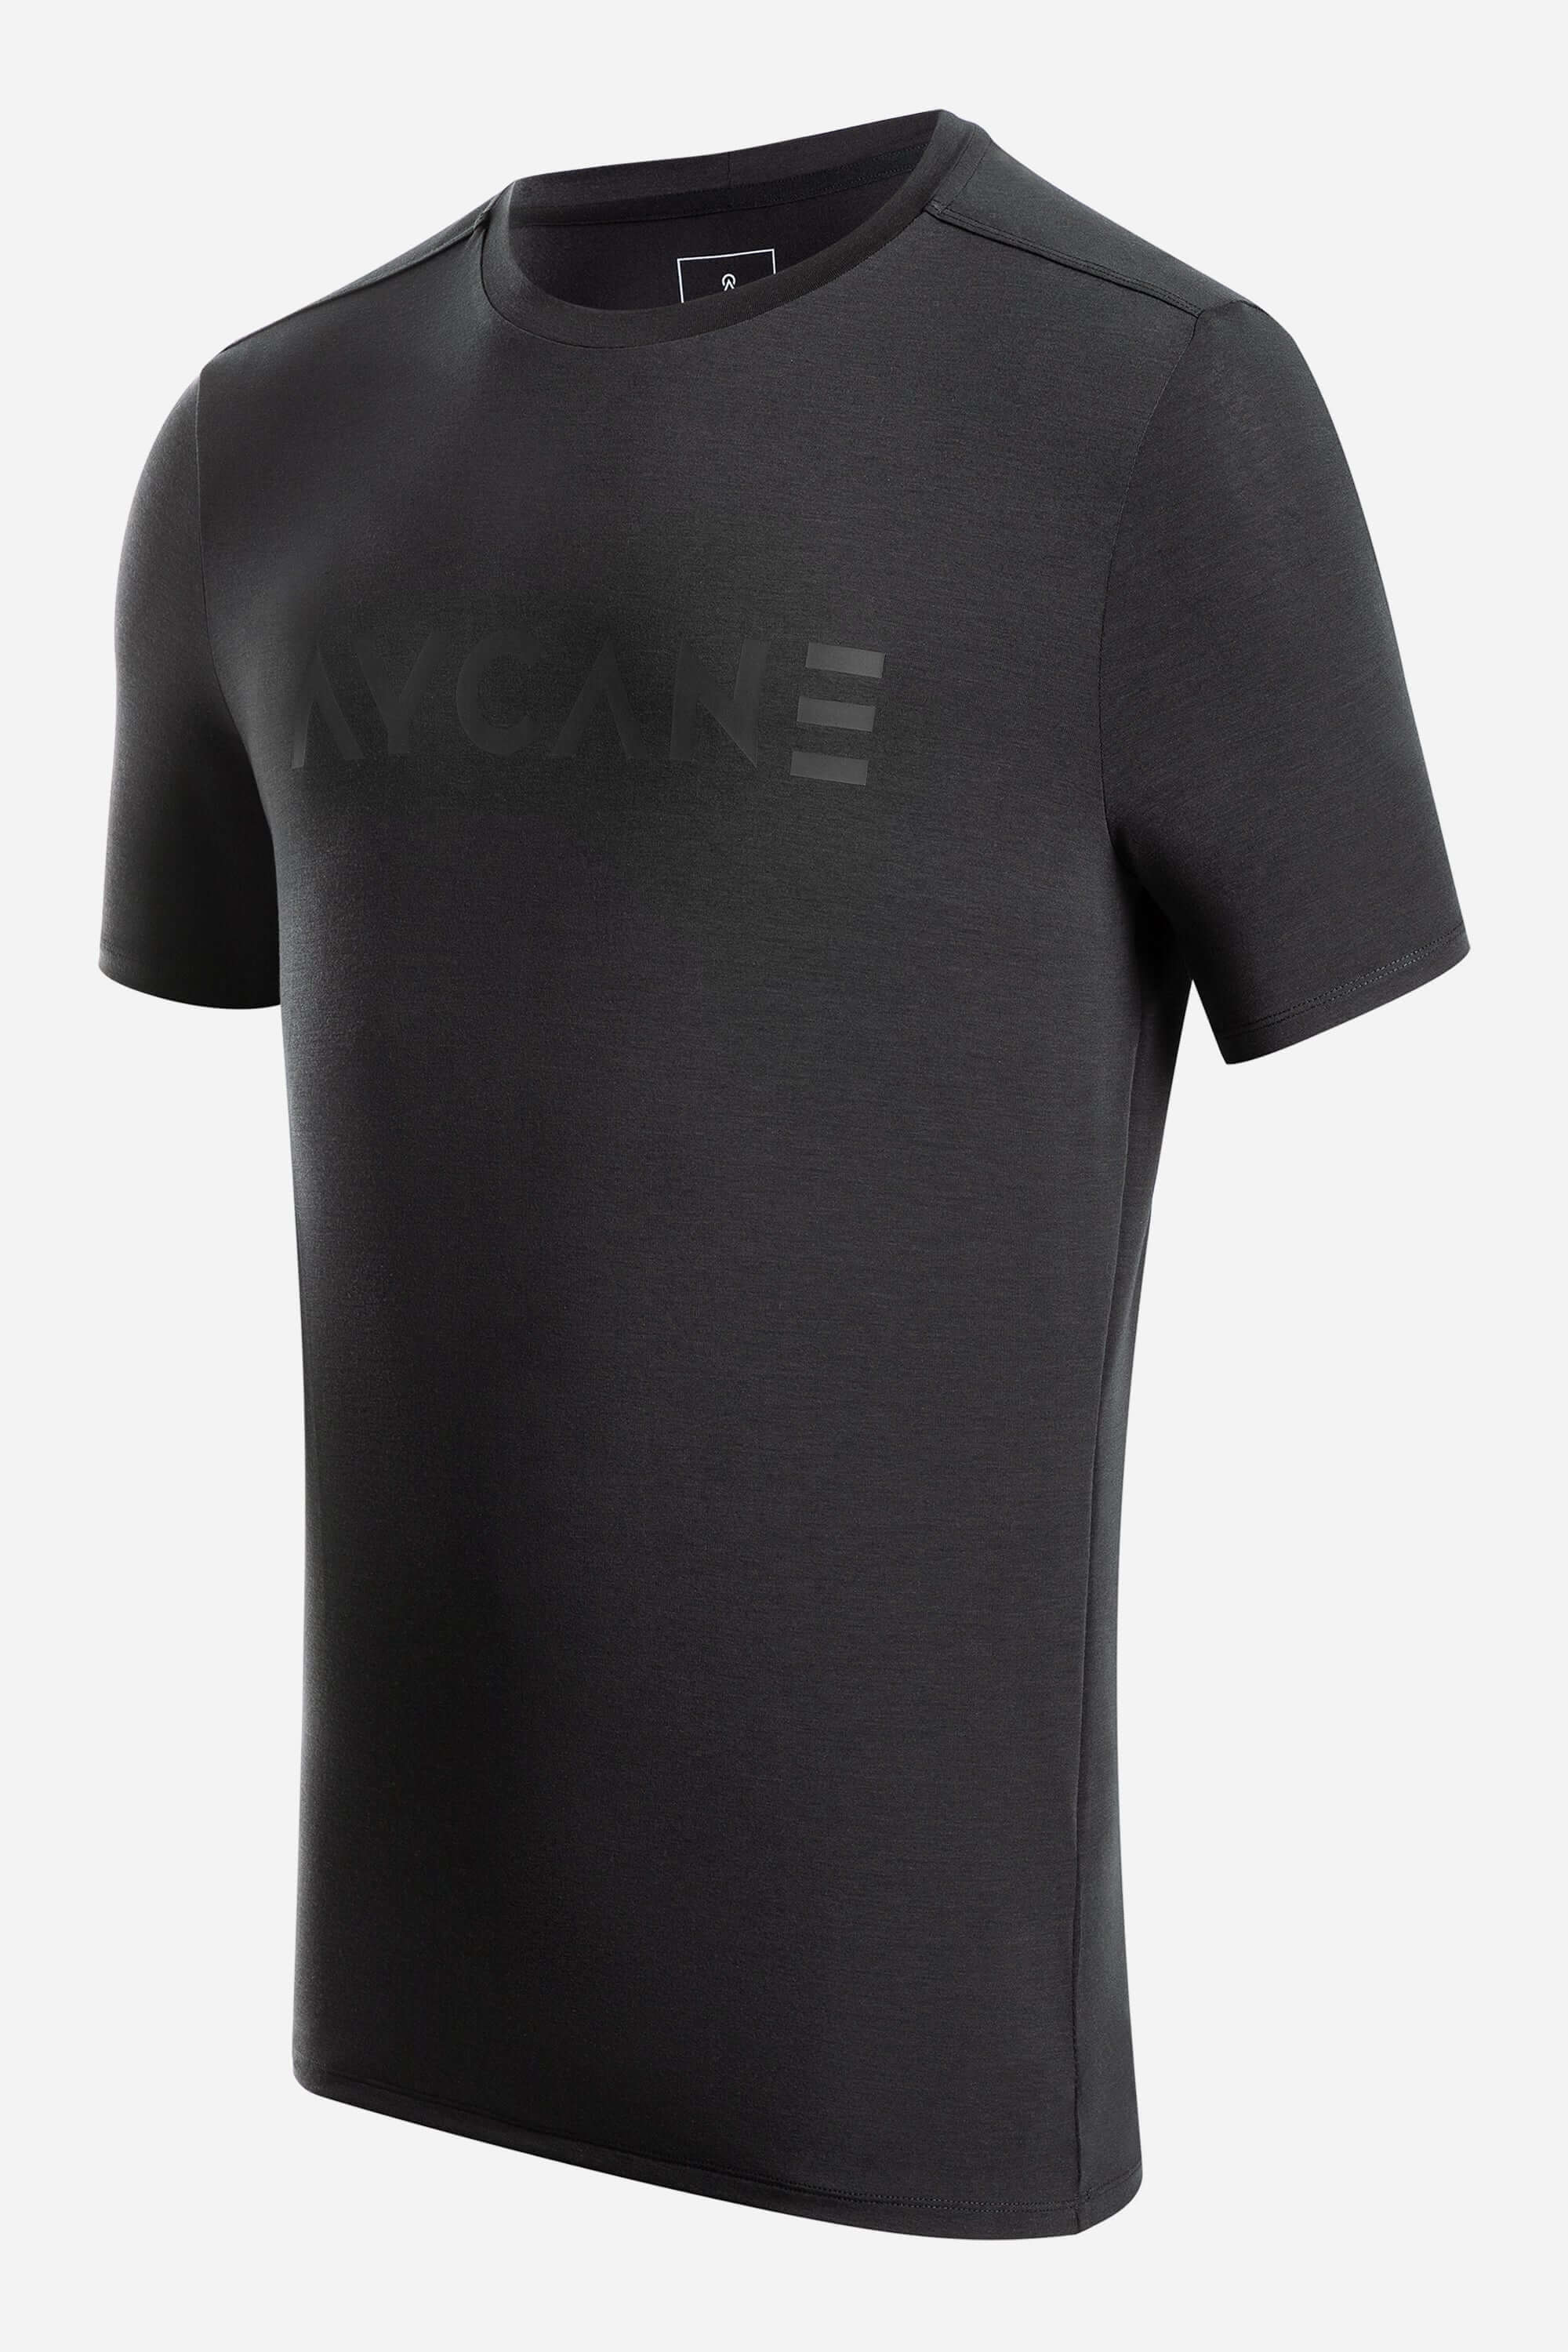 Black hockey training t-shirt short sleeve with black logo